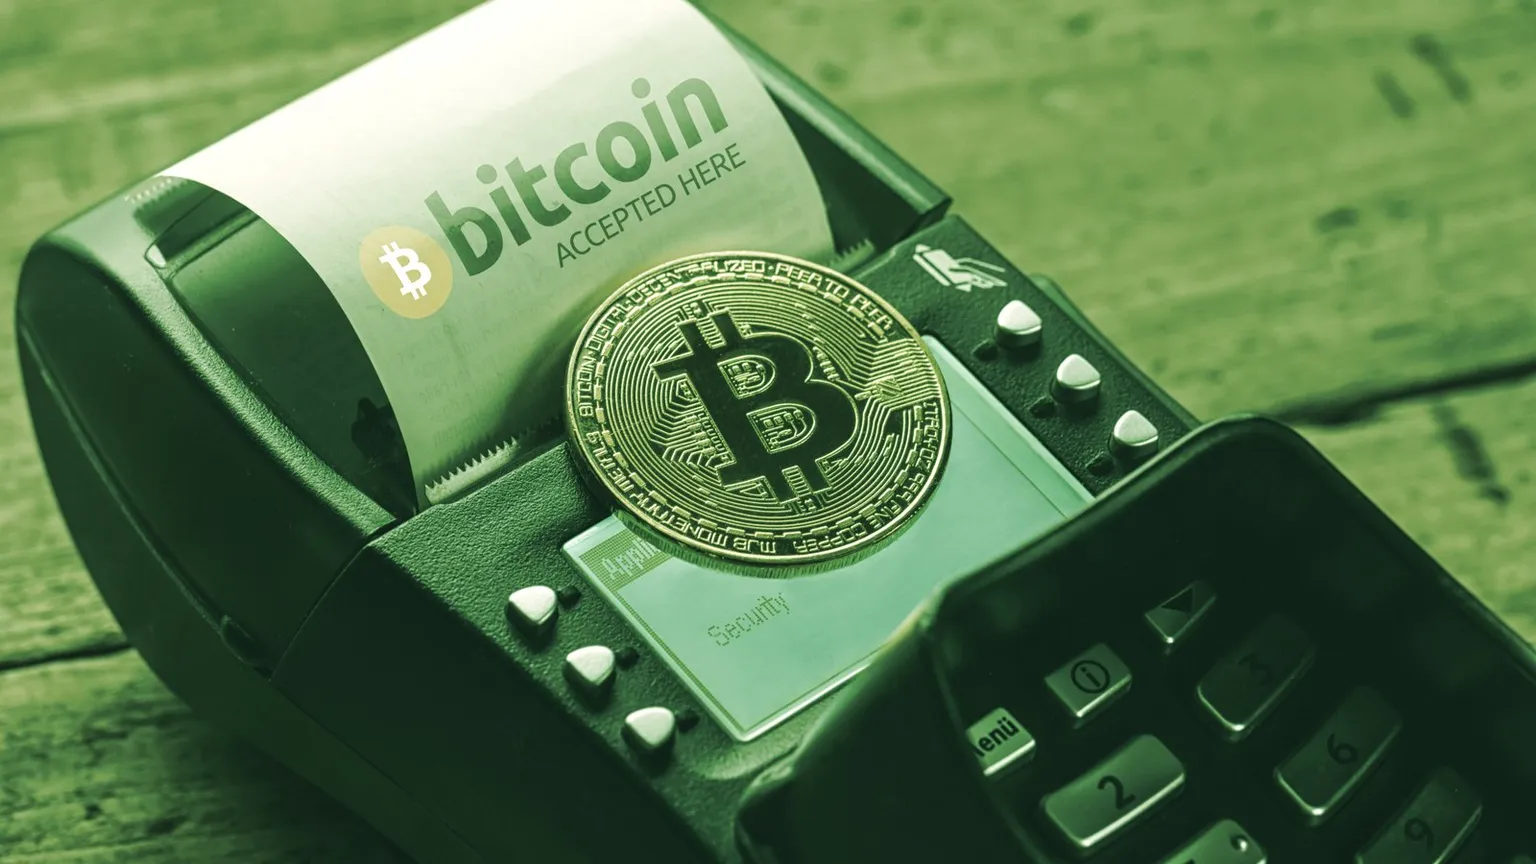 Pagos en Bitcoin. Imagen: Shutterstock